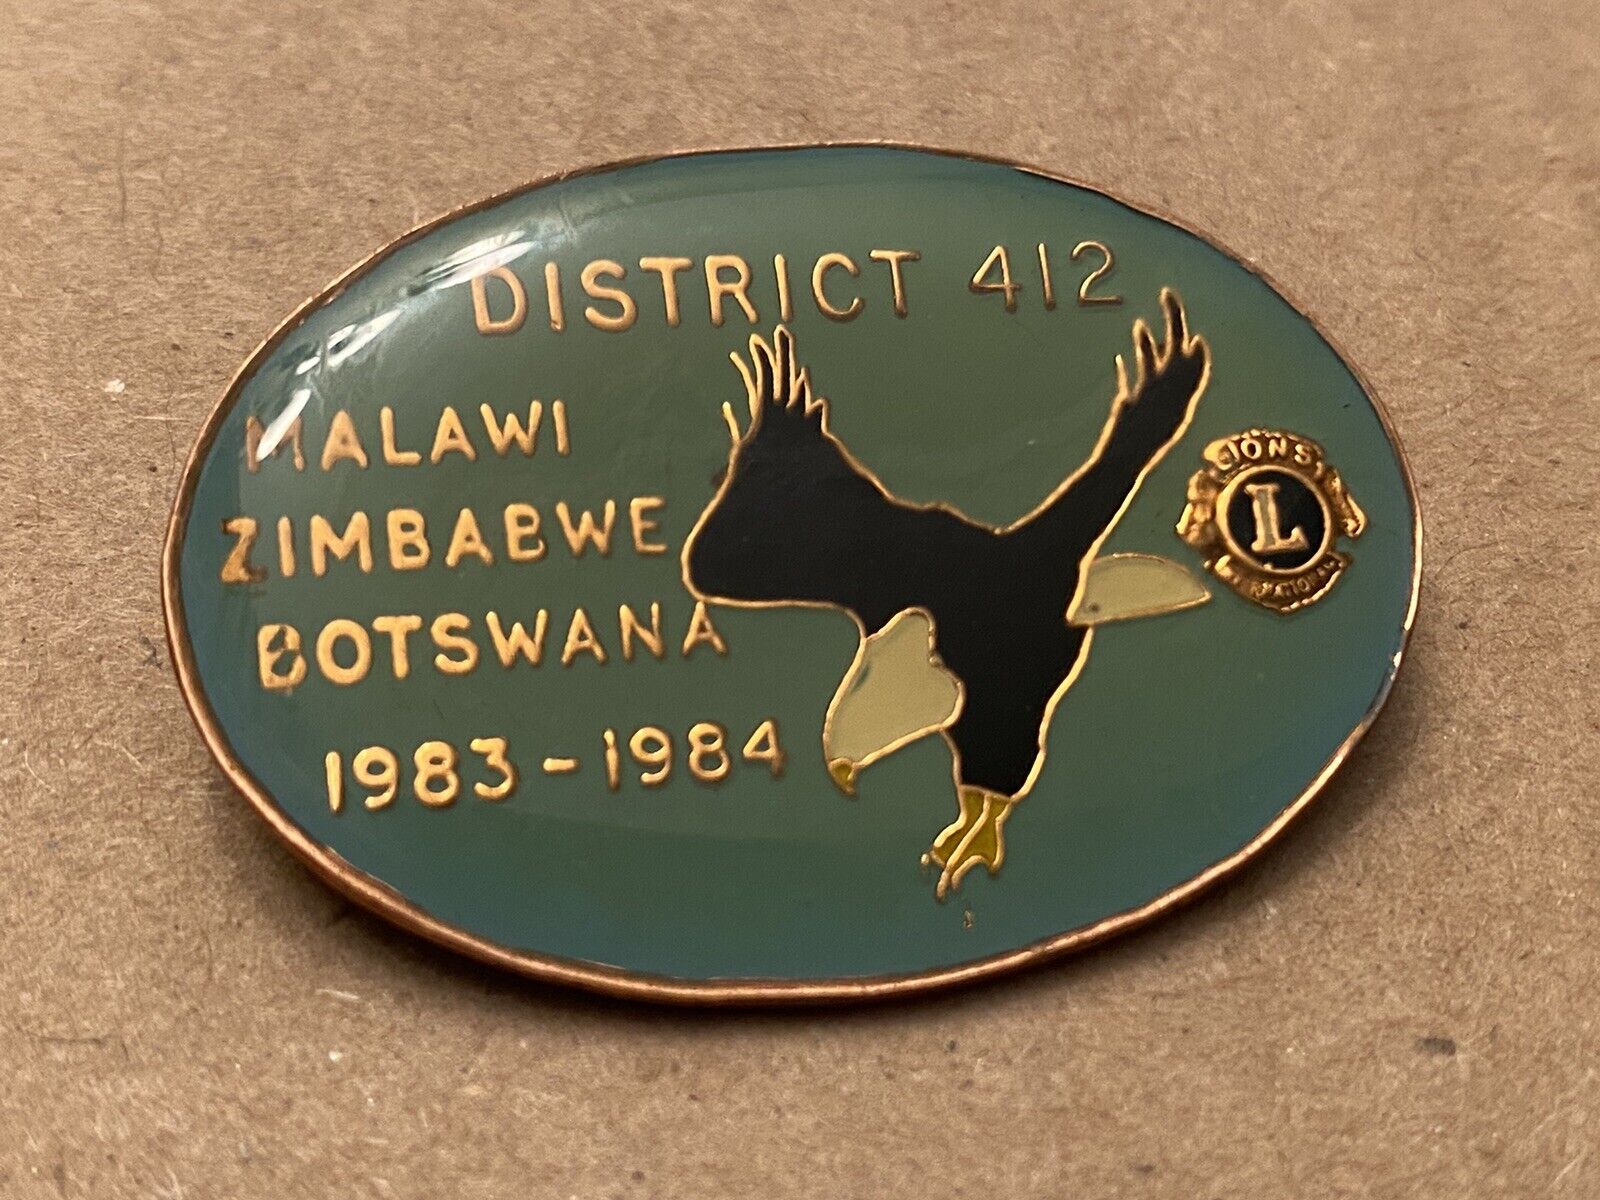 Vintage International Lions Club District 421 Malawi Zimbabwe Botswana Pin L7